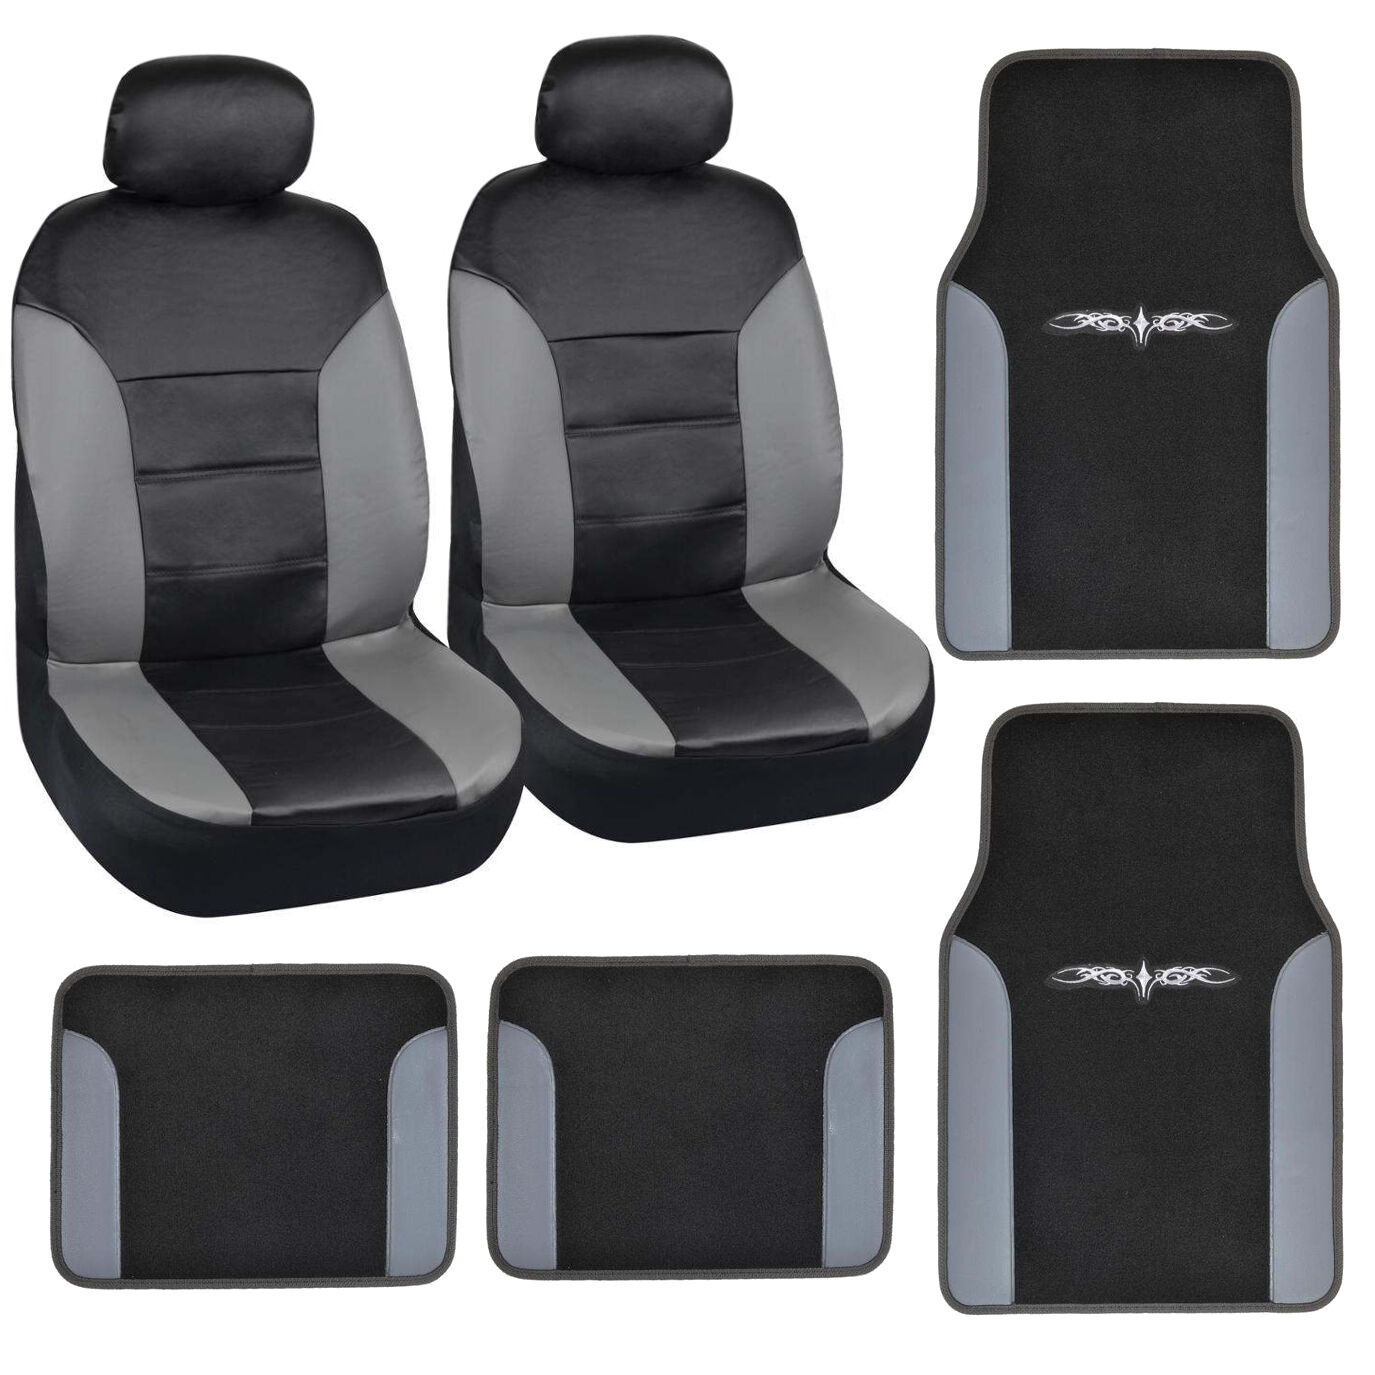 PU Leather Seat Covers Floor Mats Combo Car Van SUV Black & Gray 8pc Set